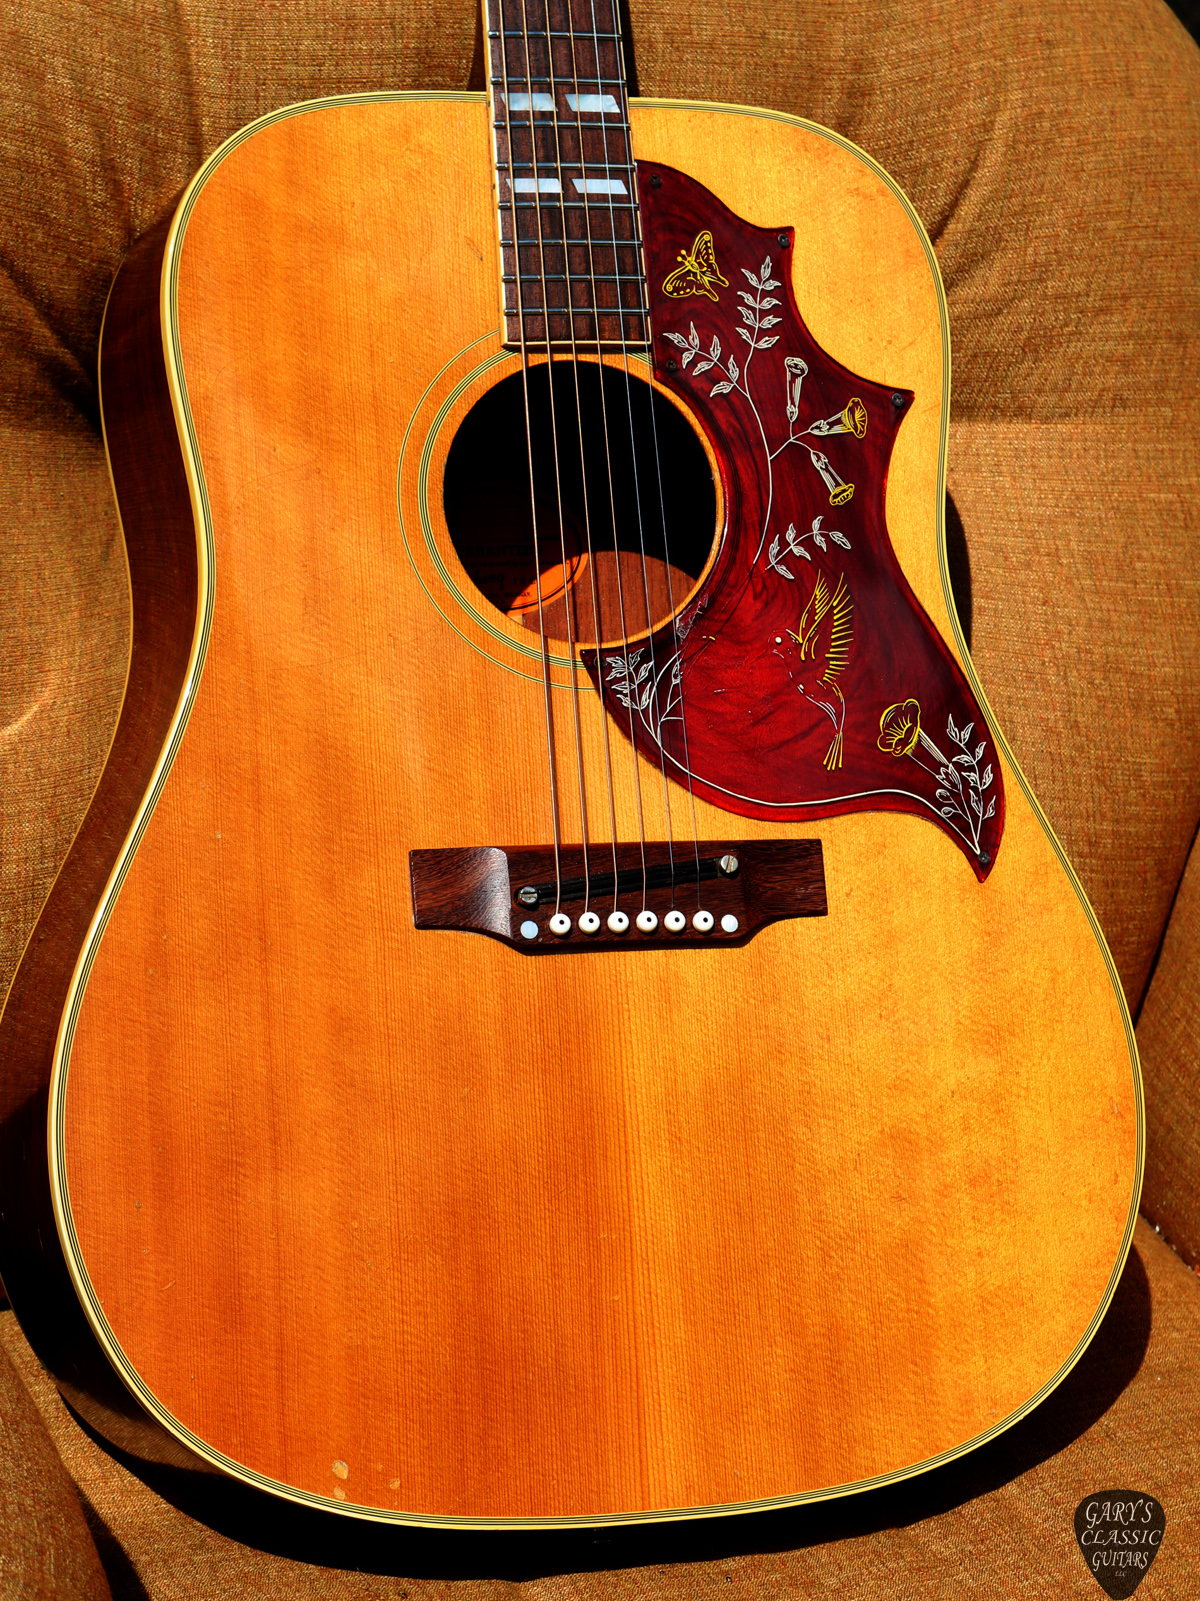 Gibson Hummingbird 1968 Natural Guitar For Sale Garys Classic Guitars